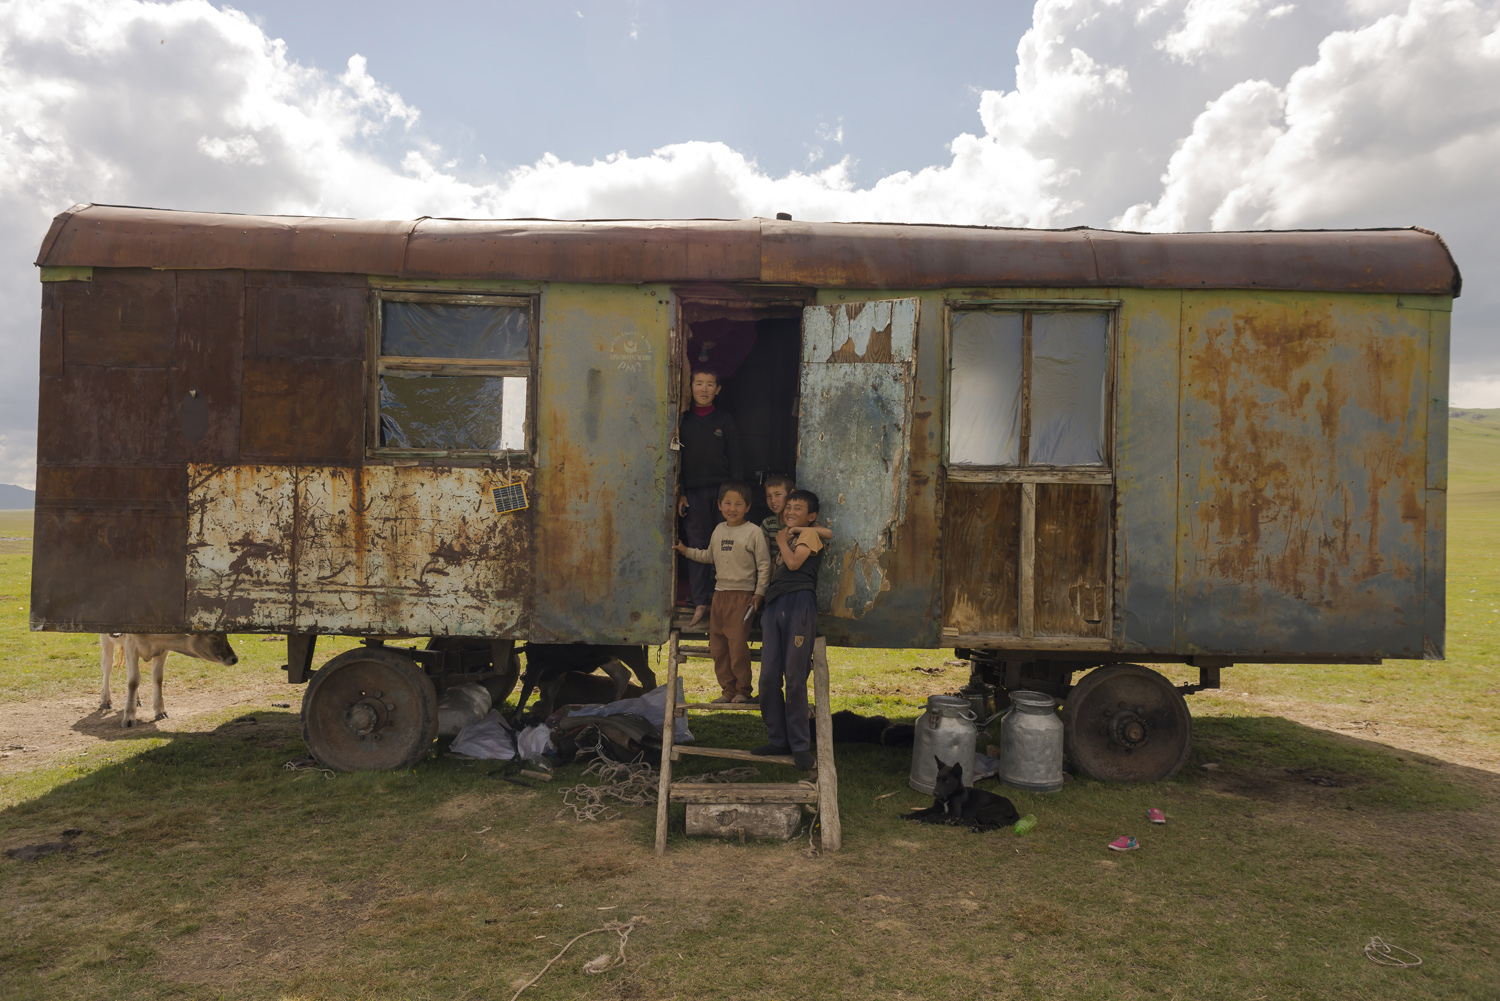 kyrgyzstan-nomads-lake-song-kul-jo-kearney-video-photography-soviet-children-railway-carriage.jpg